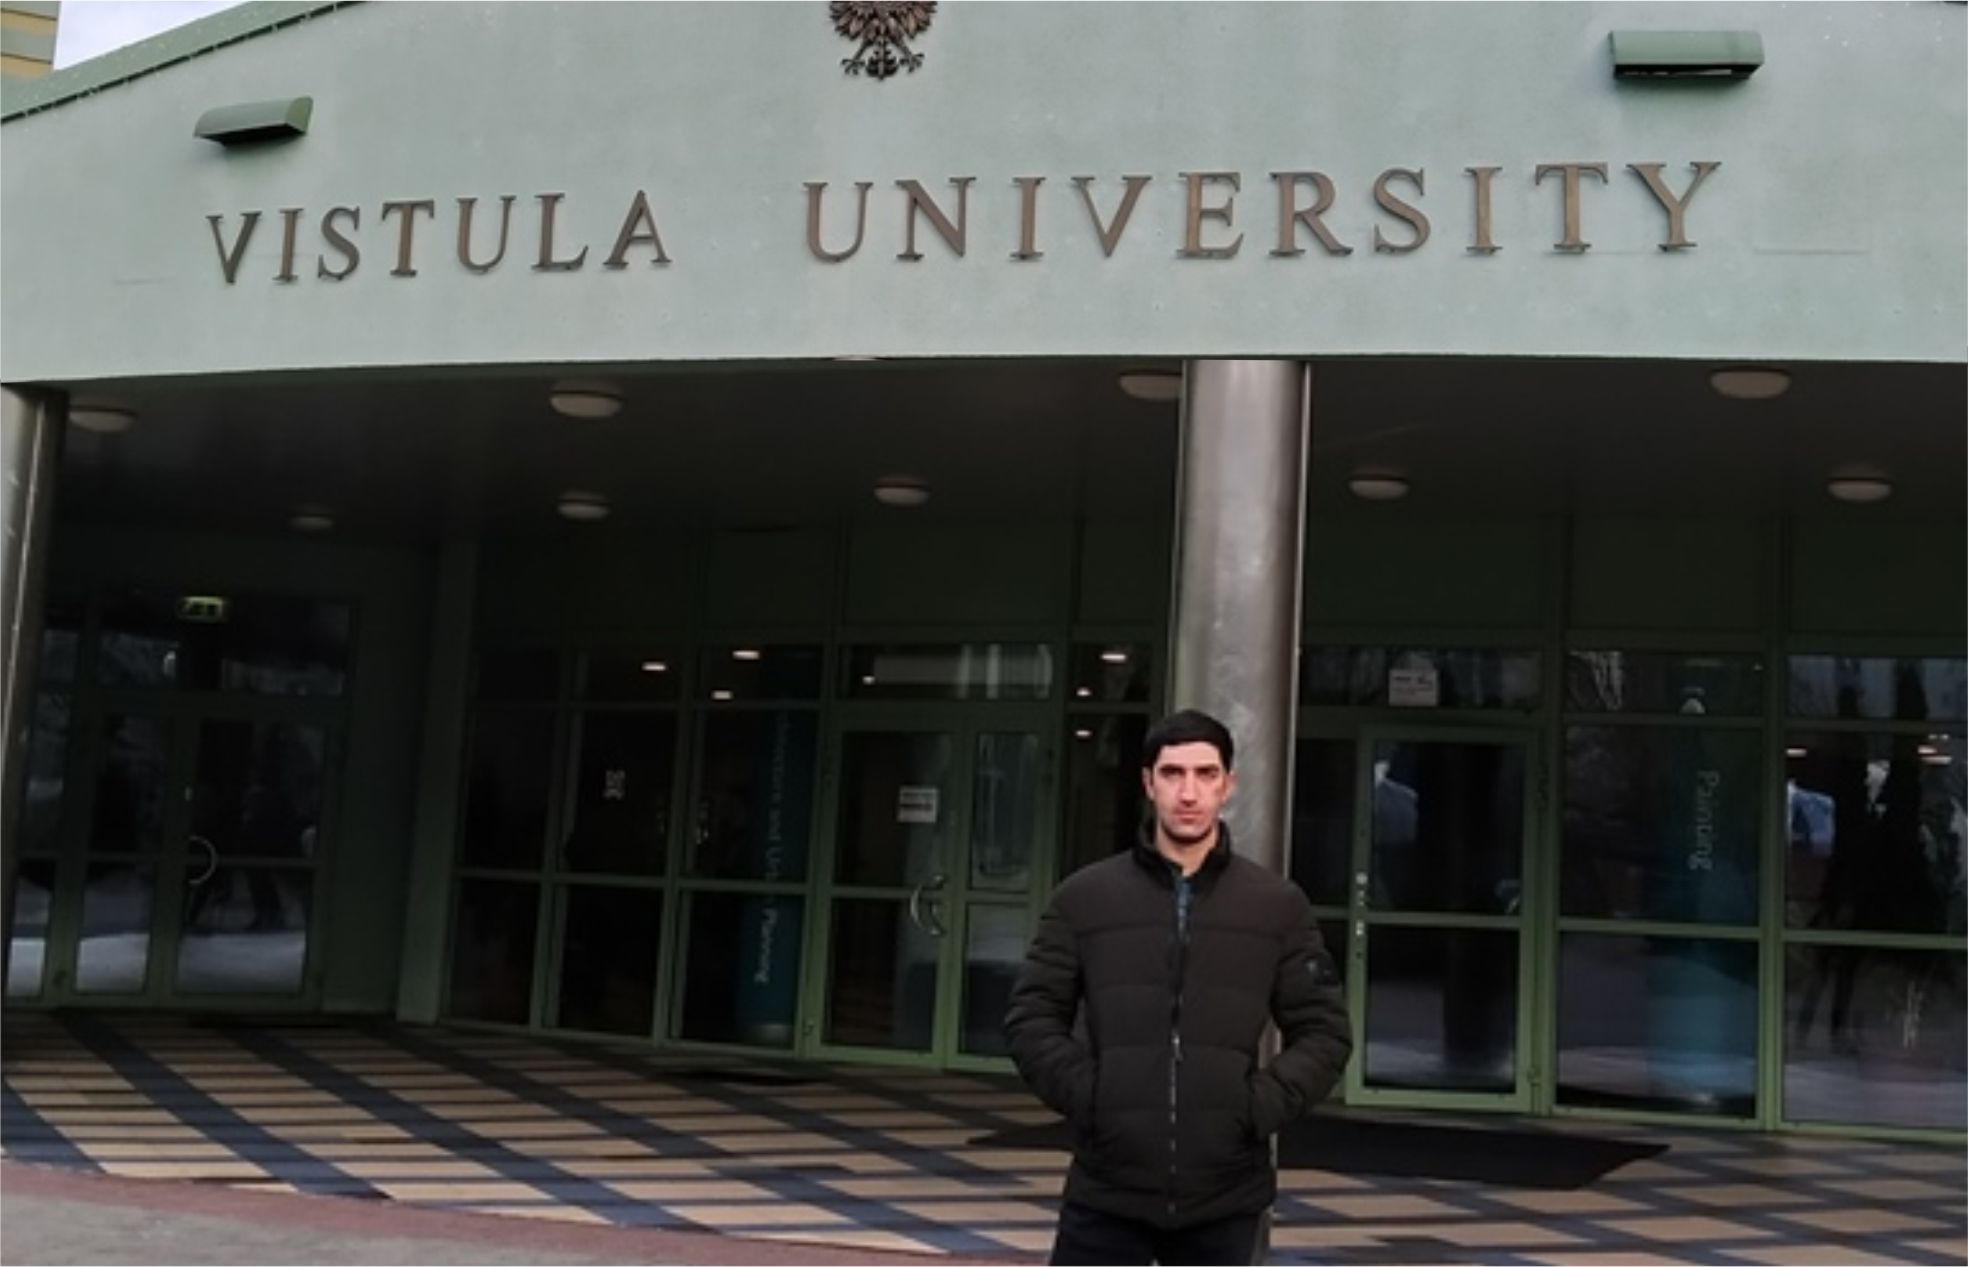 BEU alumnus at Vistula University